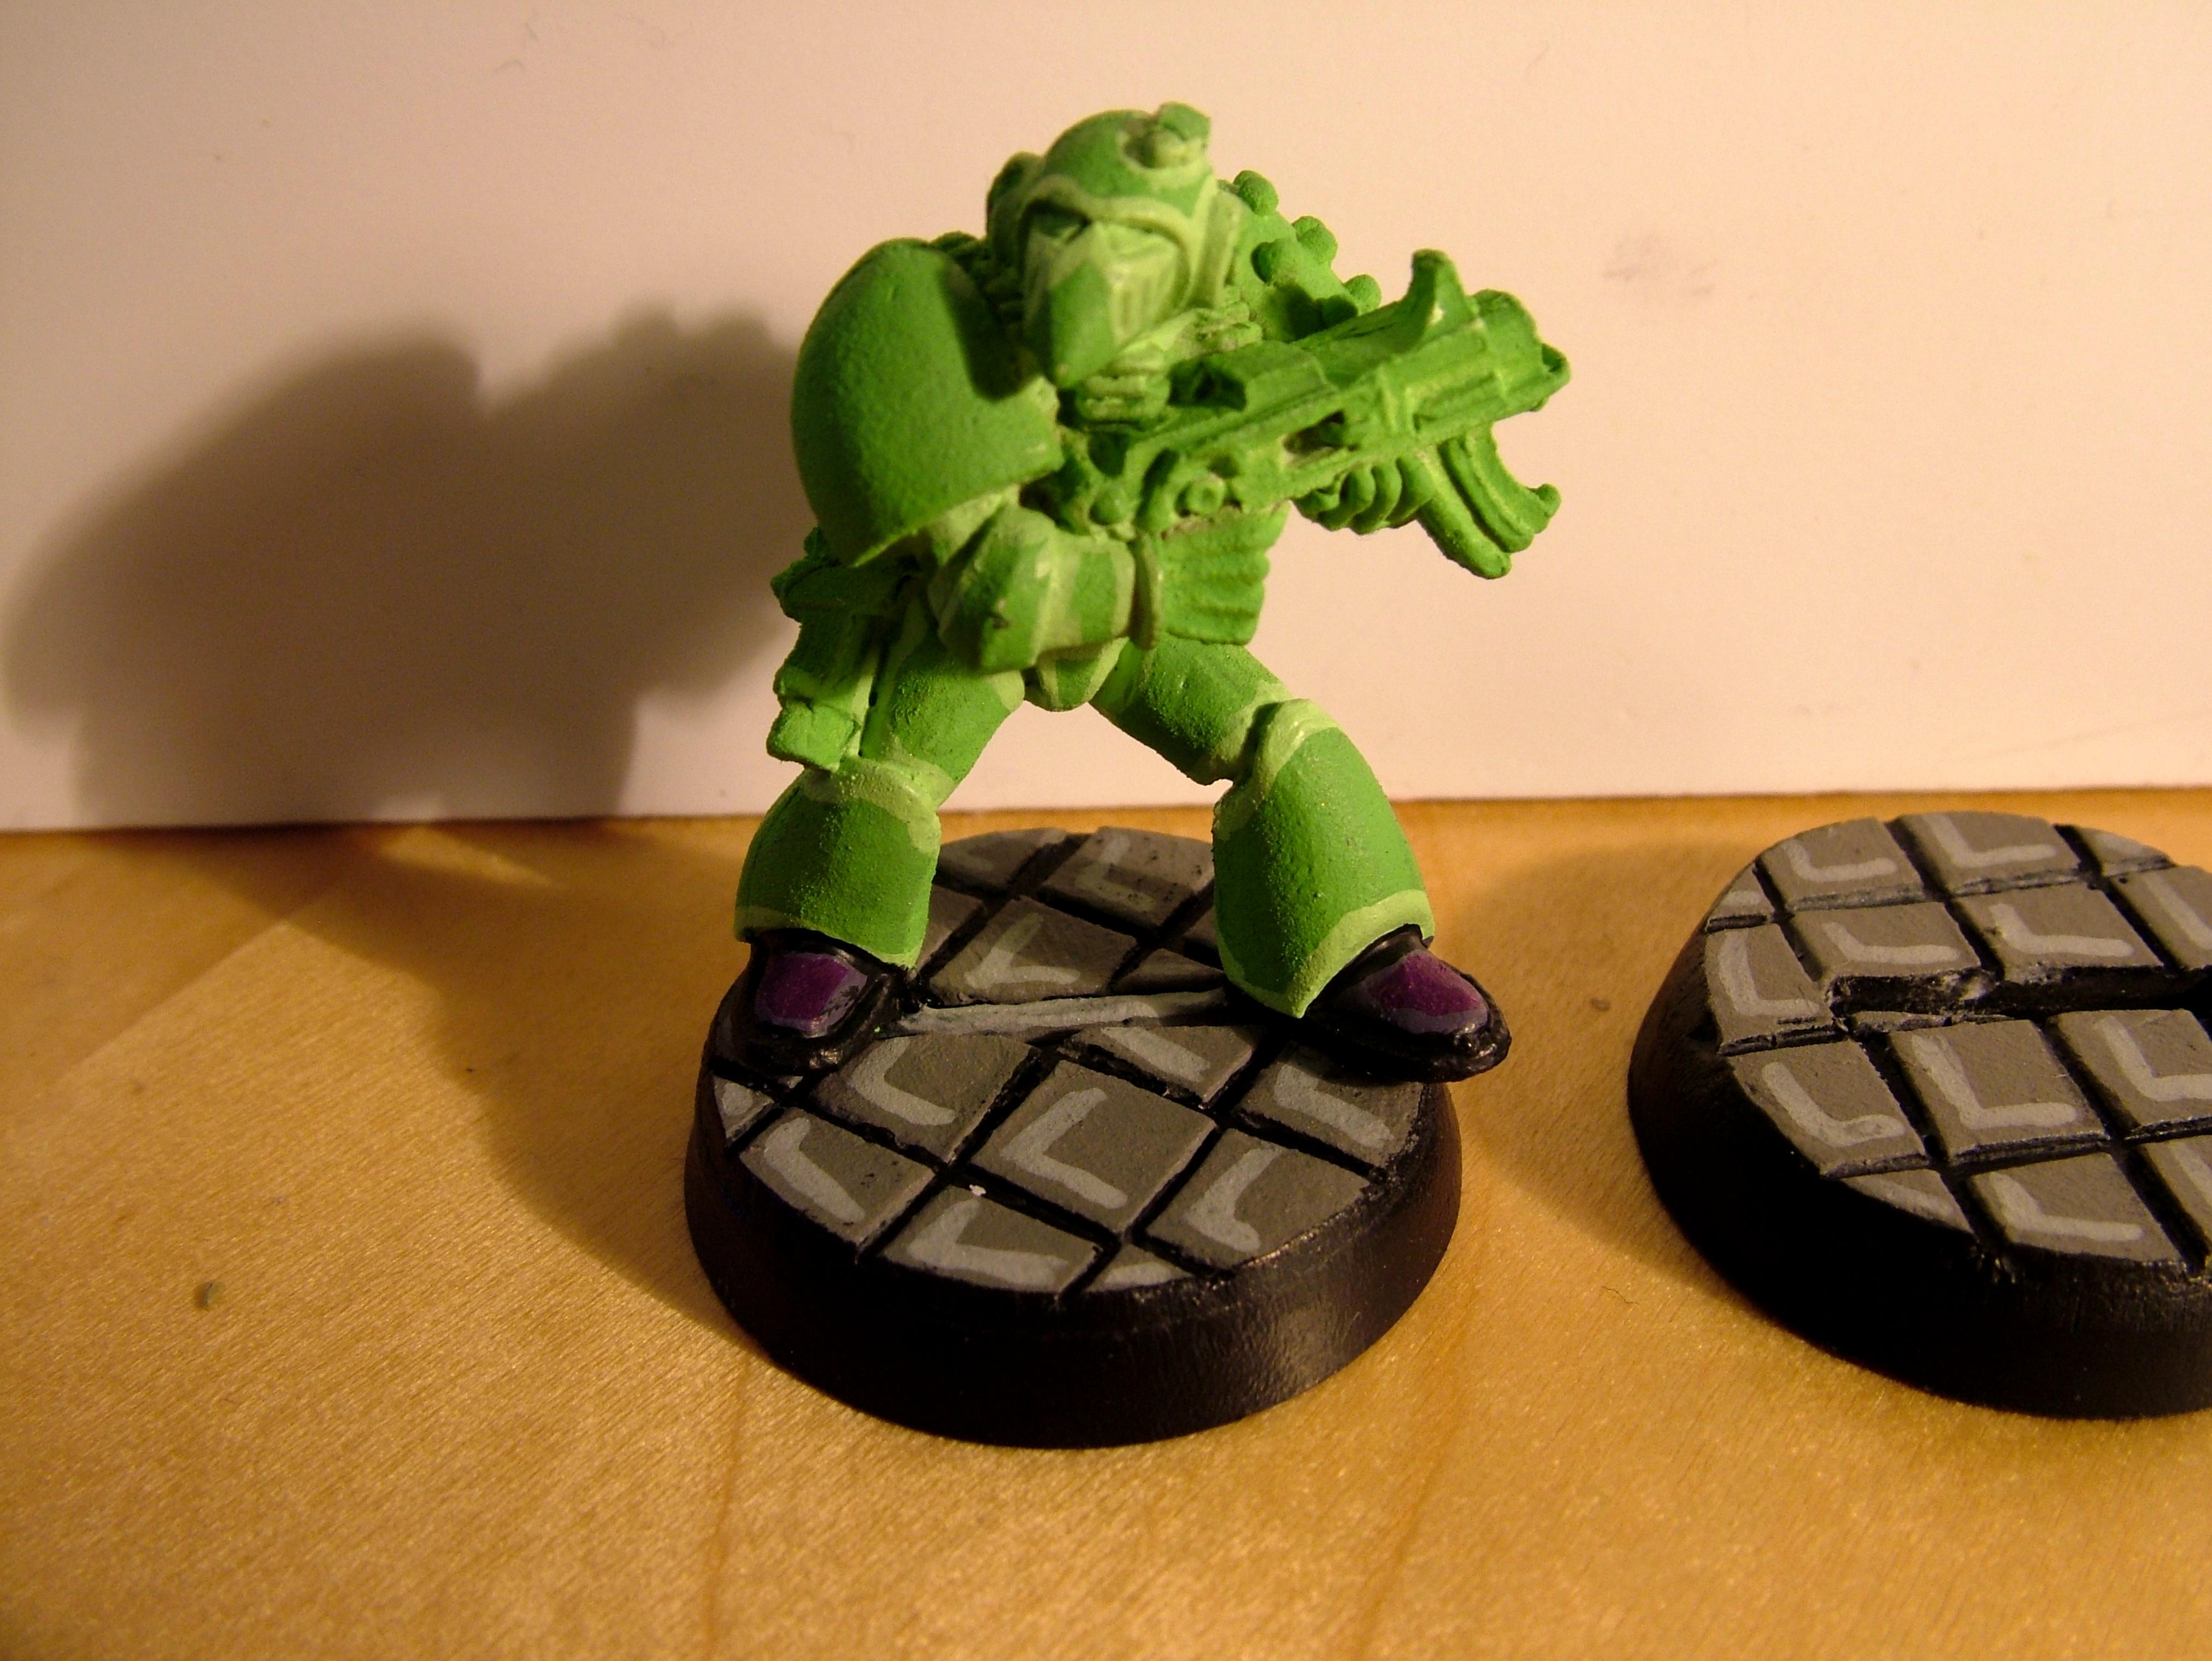 Green Scorpians, Rogue Trader, Space Marines